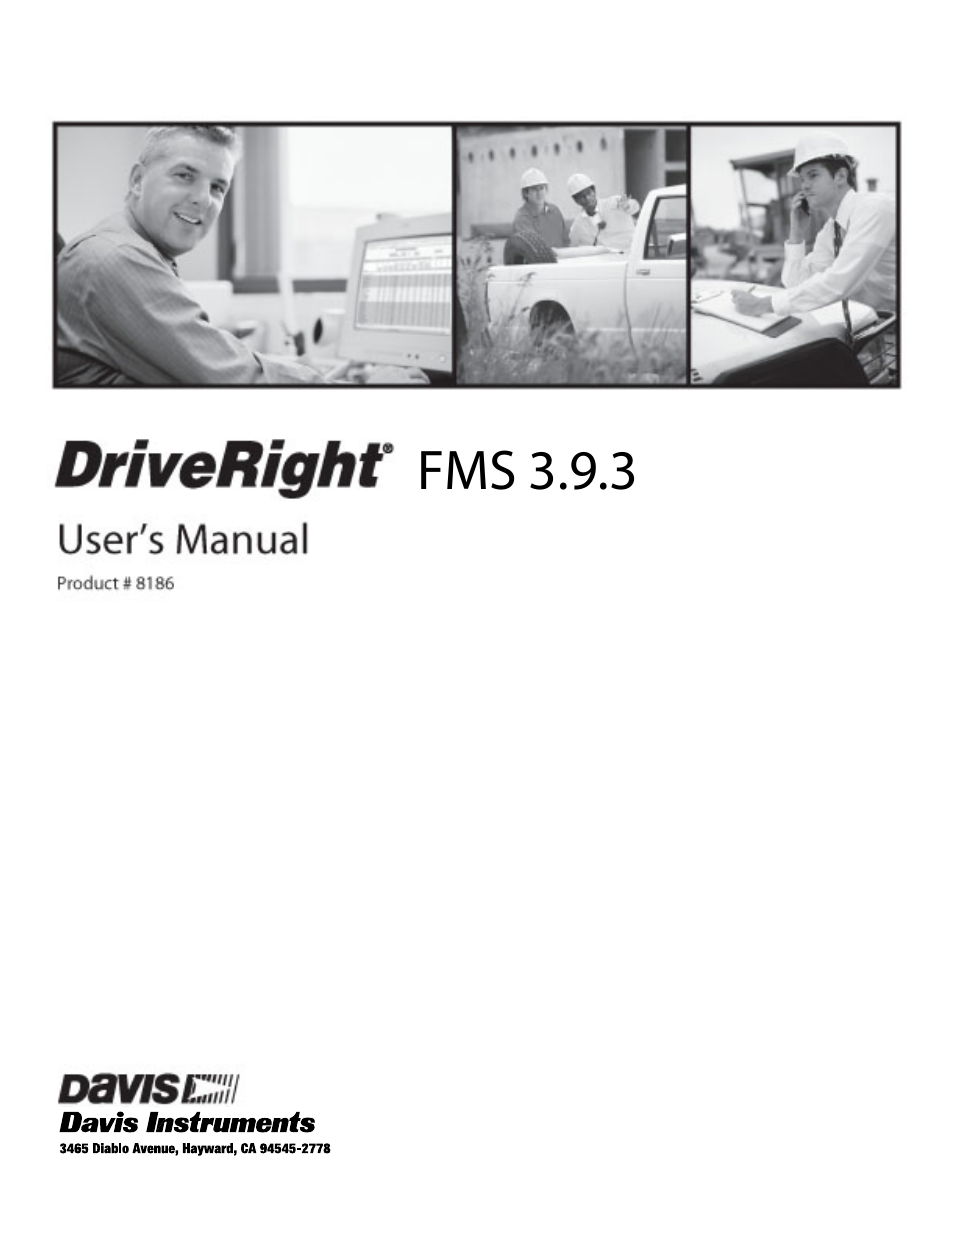 FMS 3.9.3 DriveRight (8186)